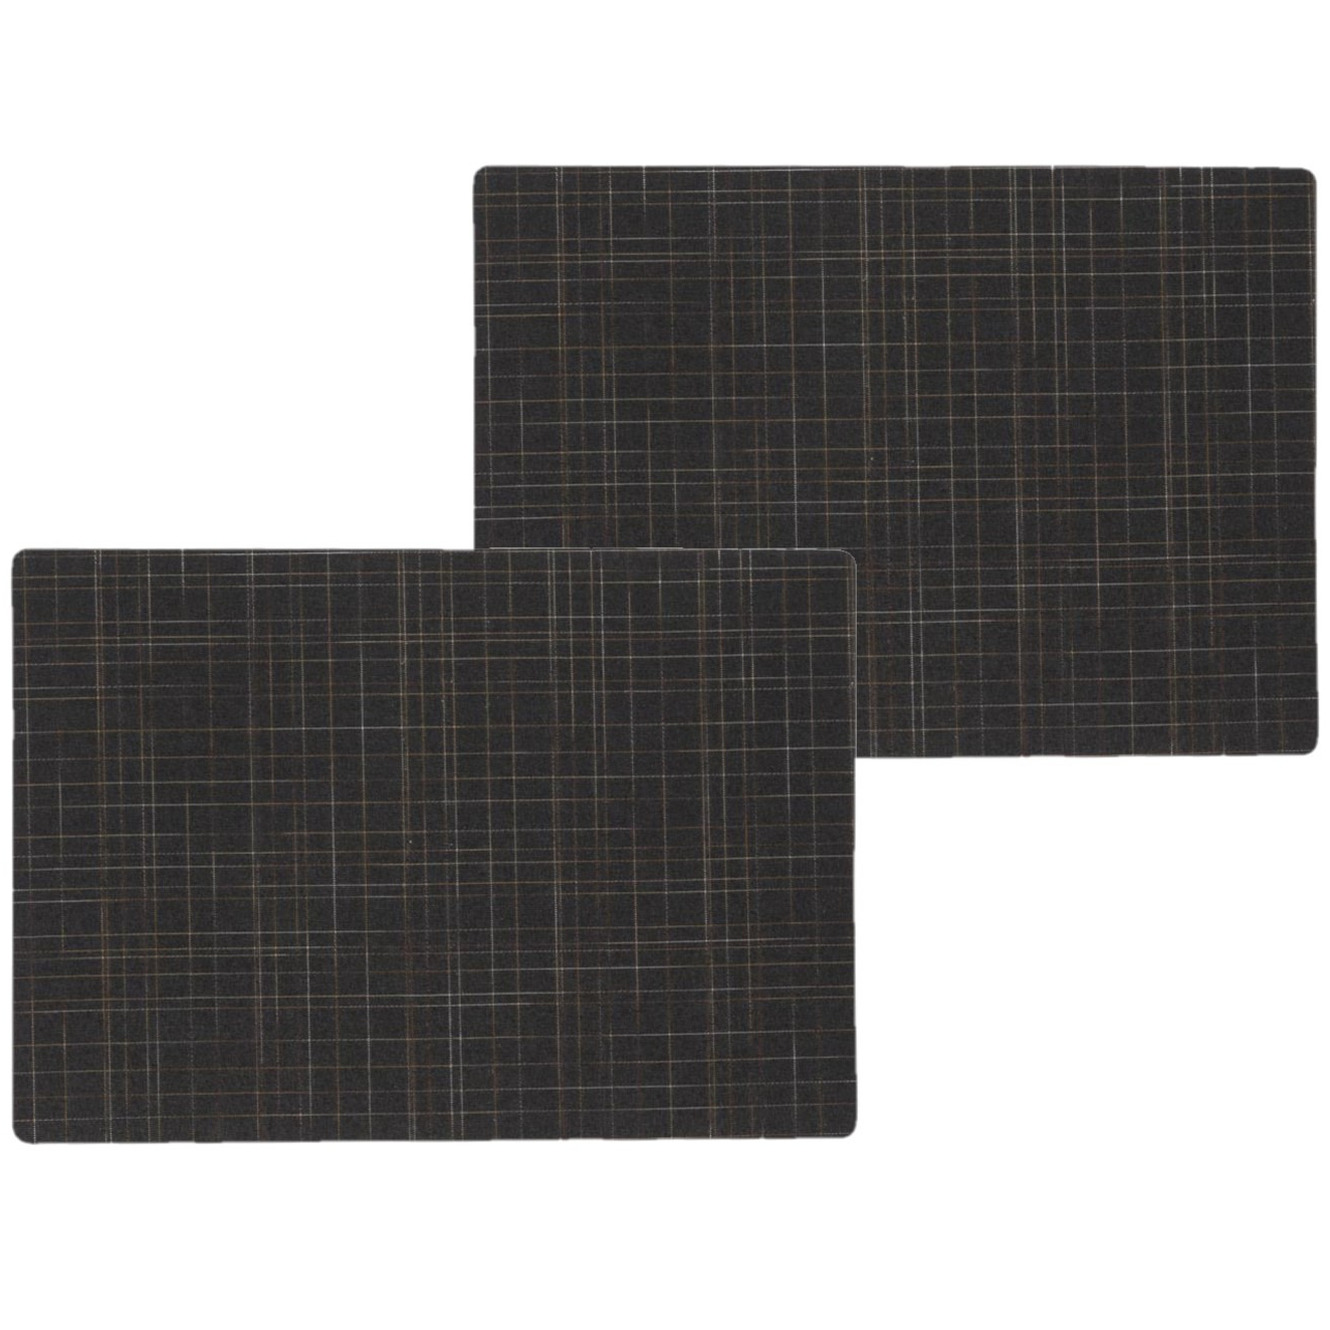 Wicotex 12x stuks stevige luxe Tafel placemats Liso zwart 30 x 43 cm -